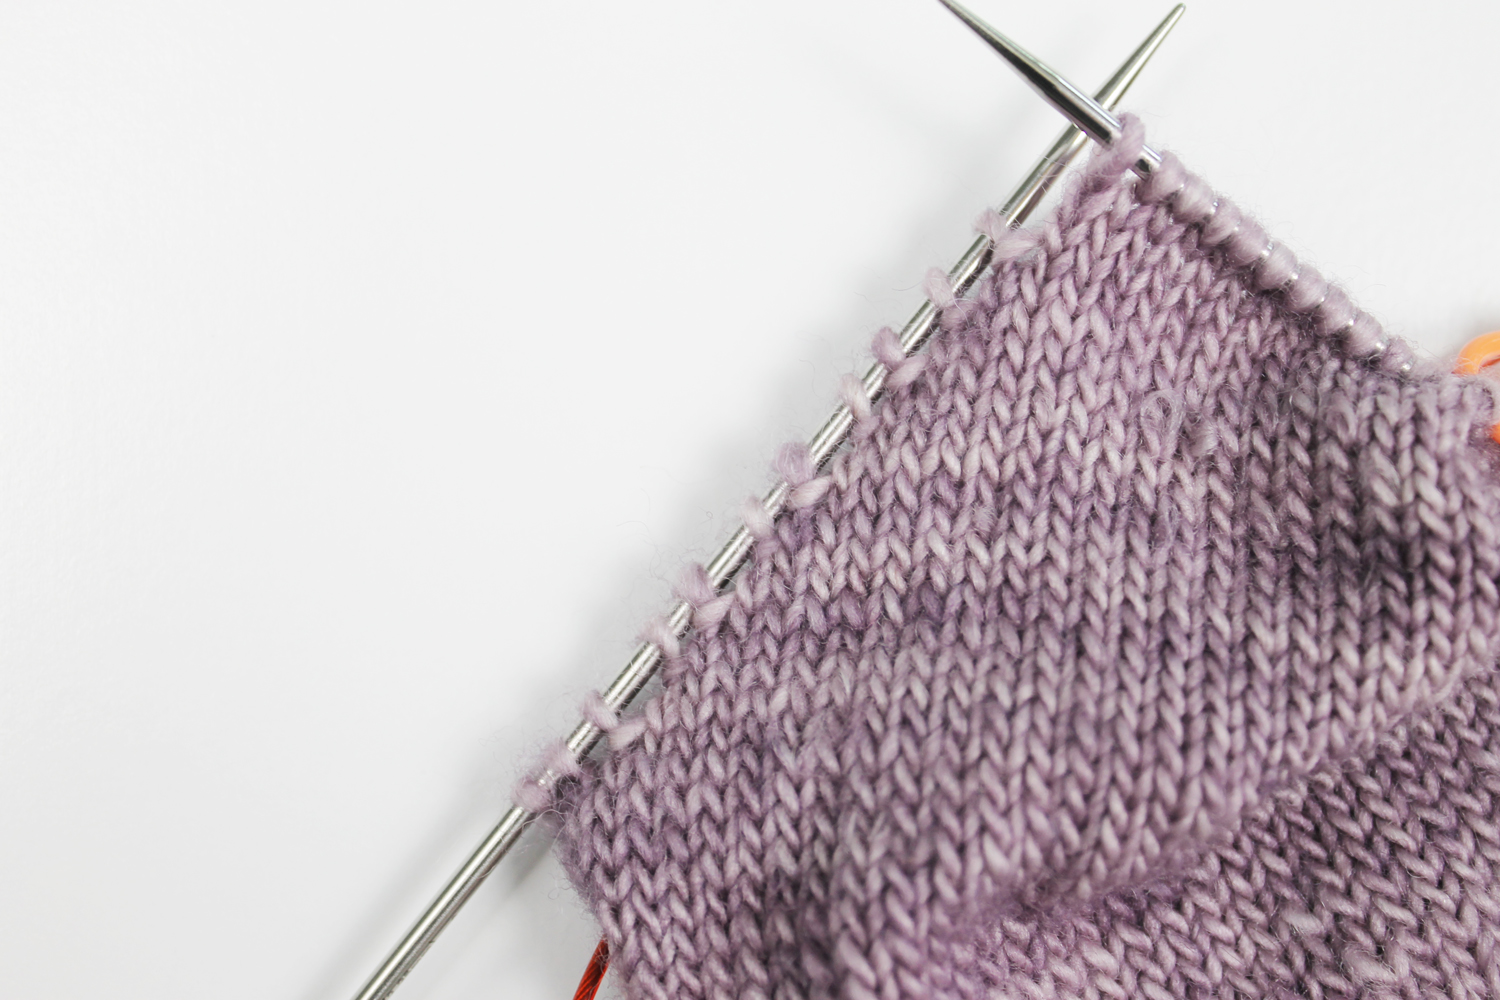 Short Row Heel knitting